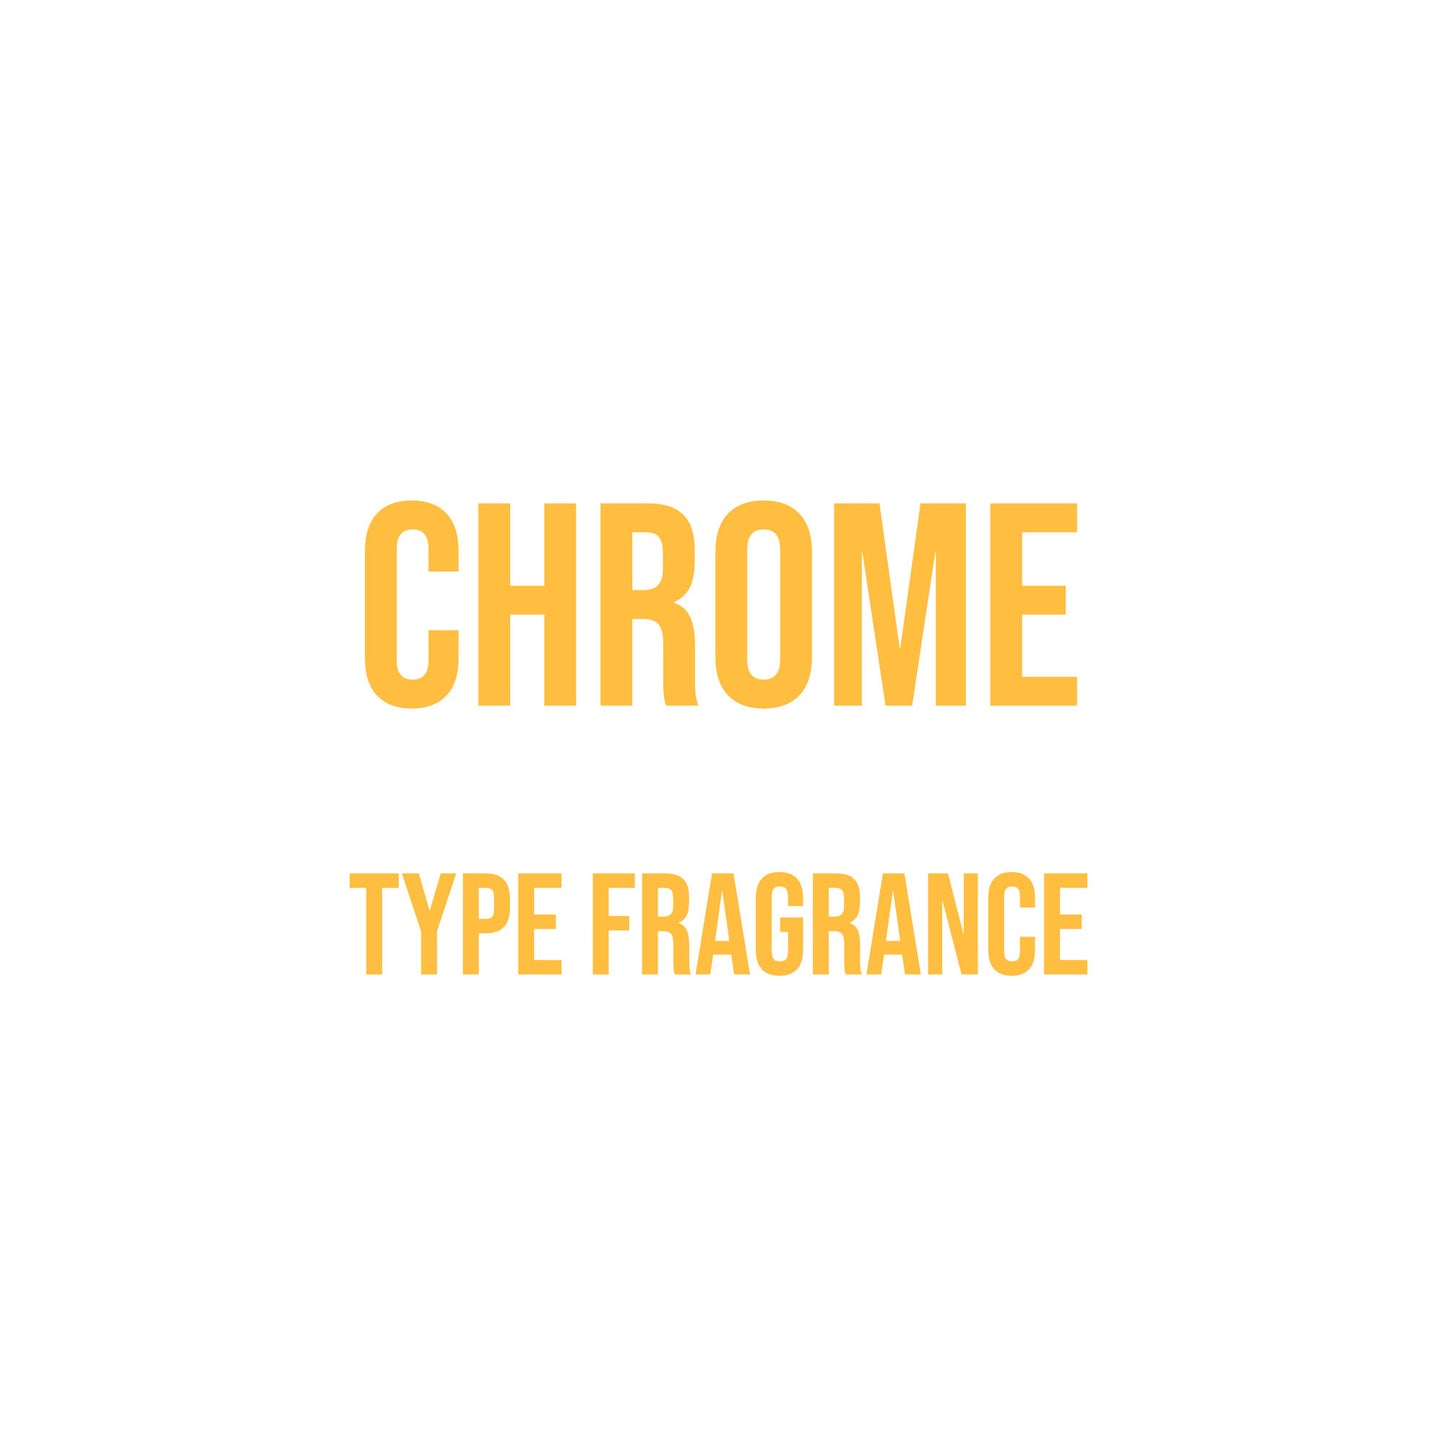 Chrome Type Fragrance